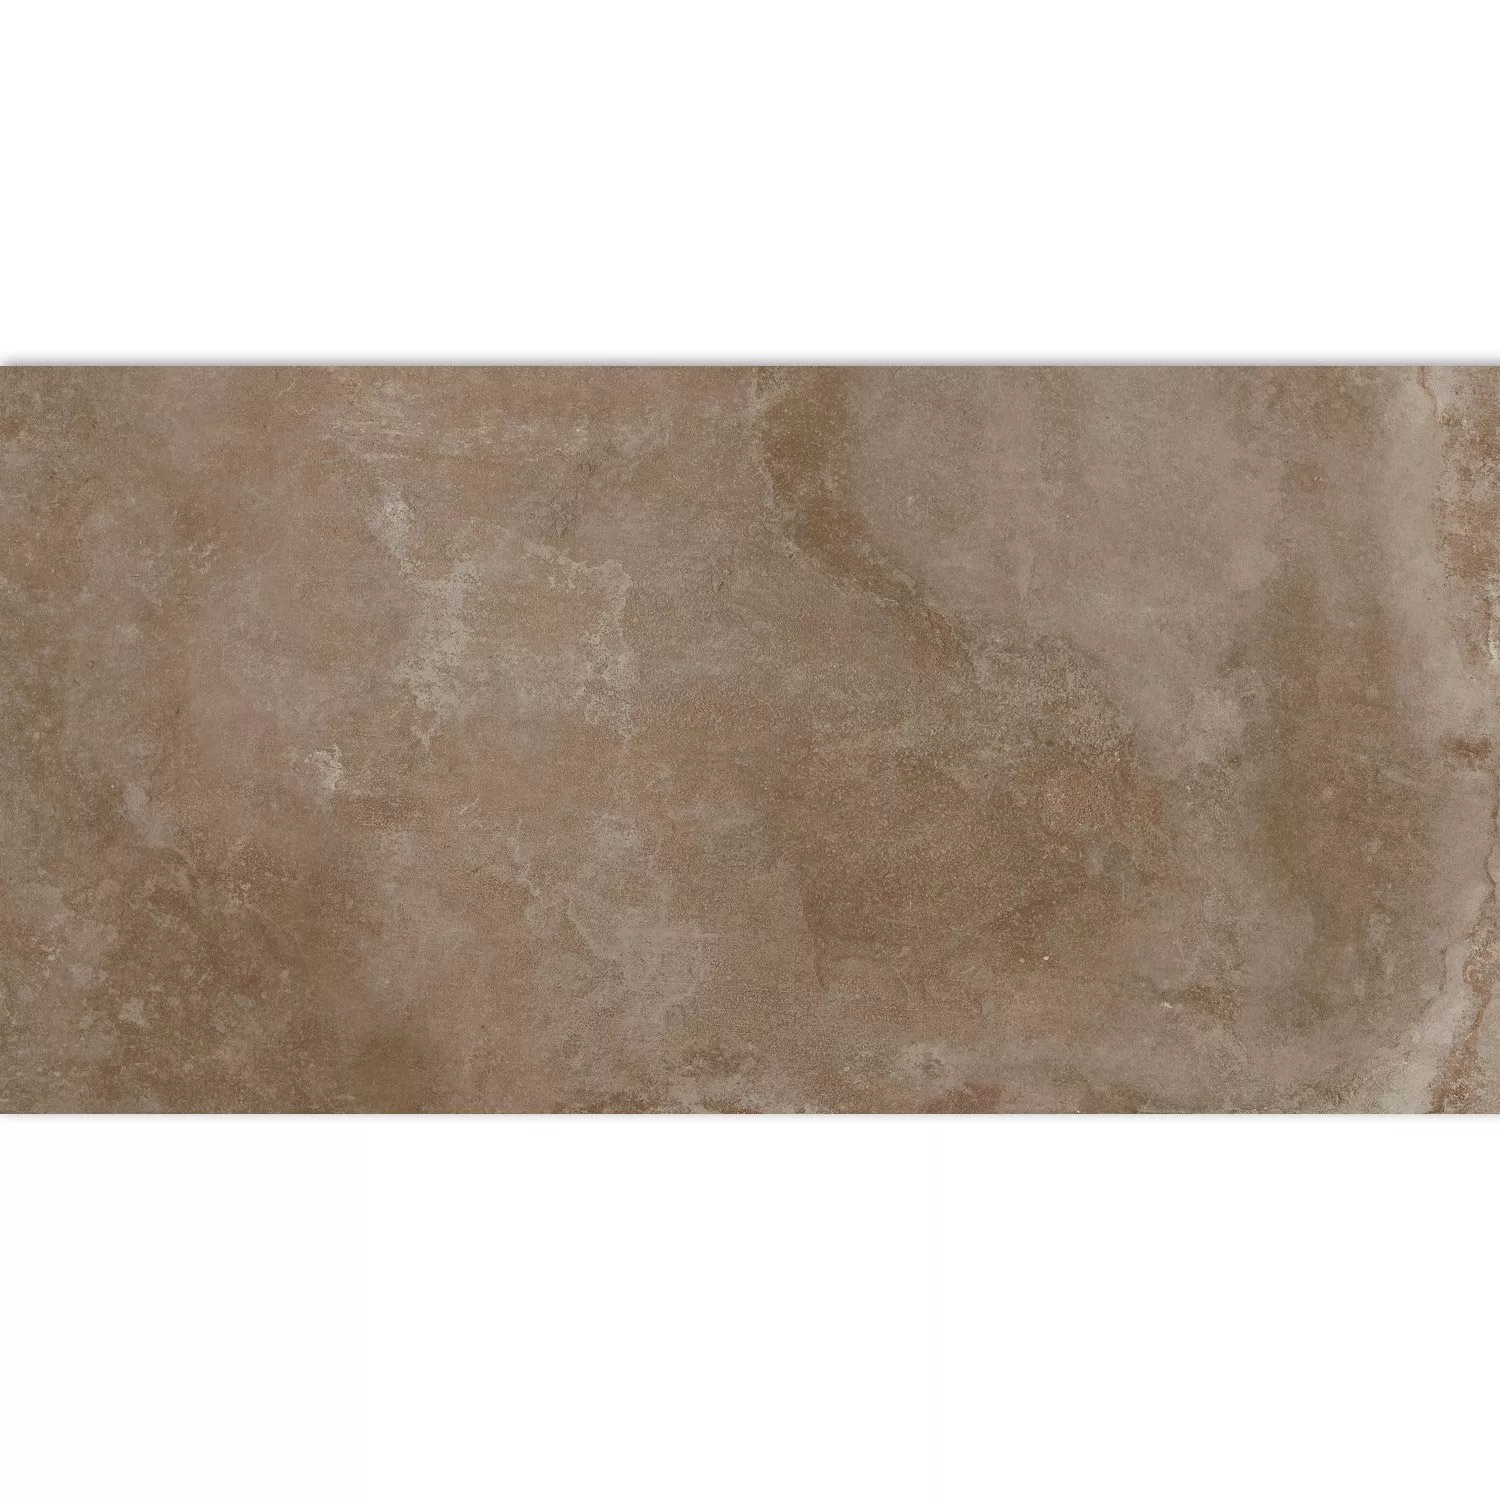 Sample Vloertegels Cement Optic Maryland Bruin 30x60cm